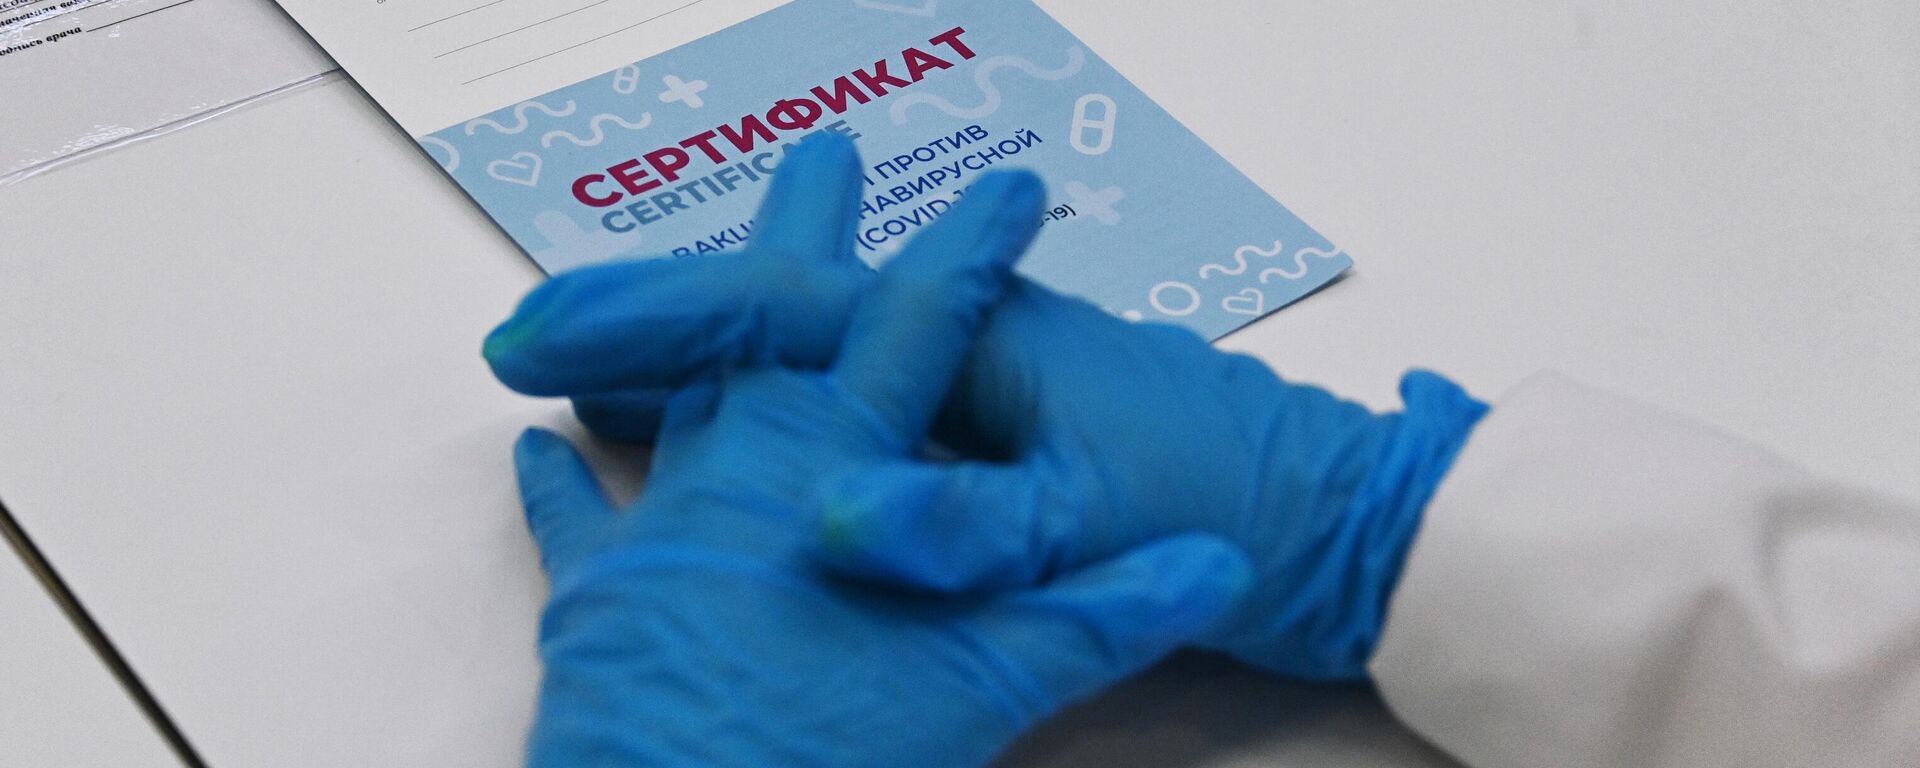 Сертификат о вакцинации против коронавируса - Sputnik Узбекистан, 1920, 26.11.2021